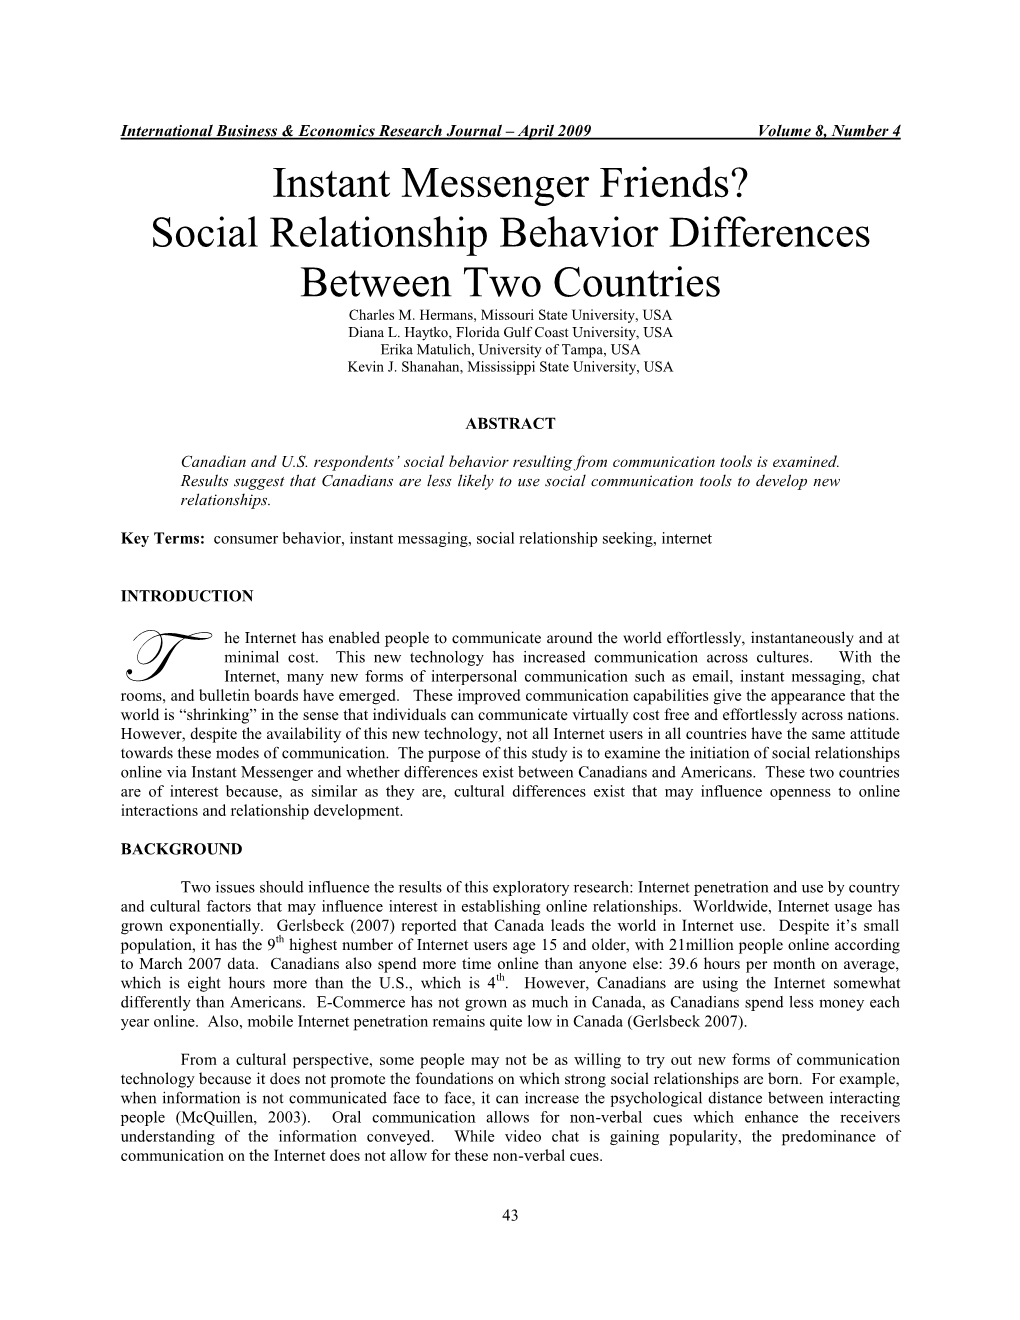 Instant Messaging, Social Relationship Seeking, Internet